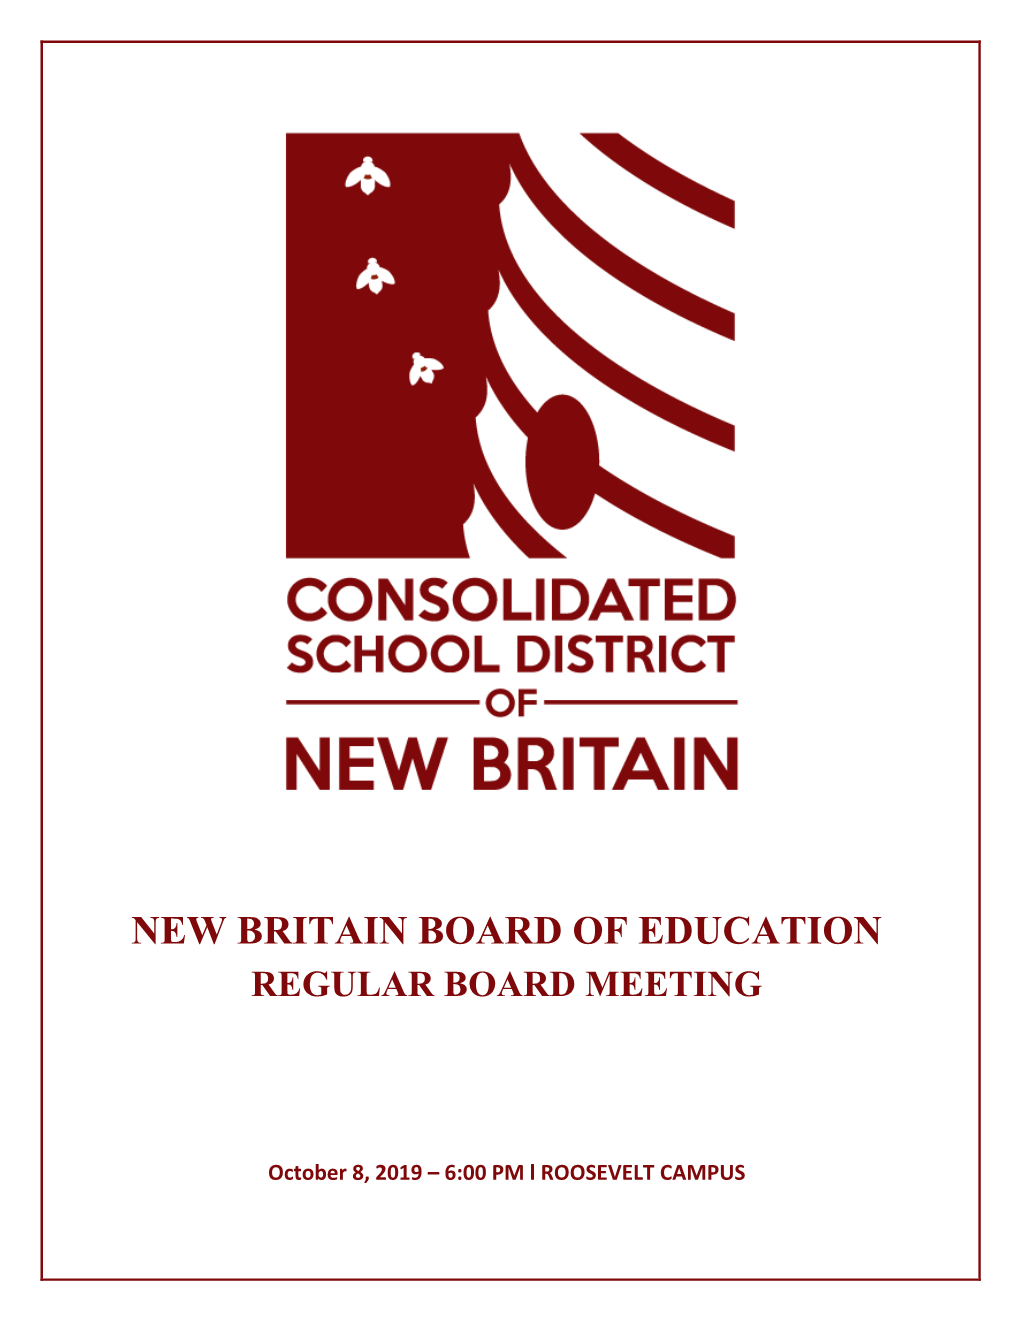 New Britain Board of Education